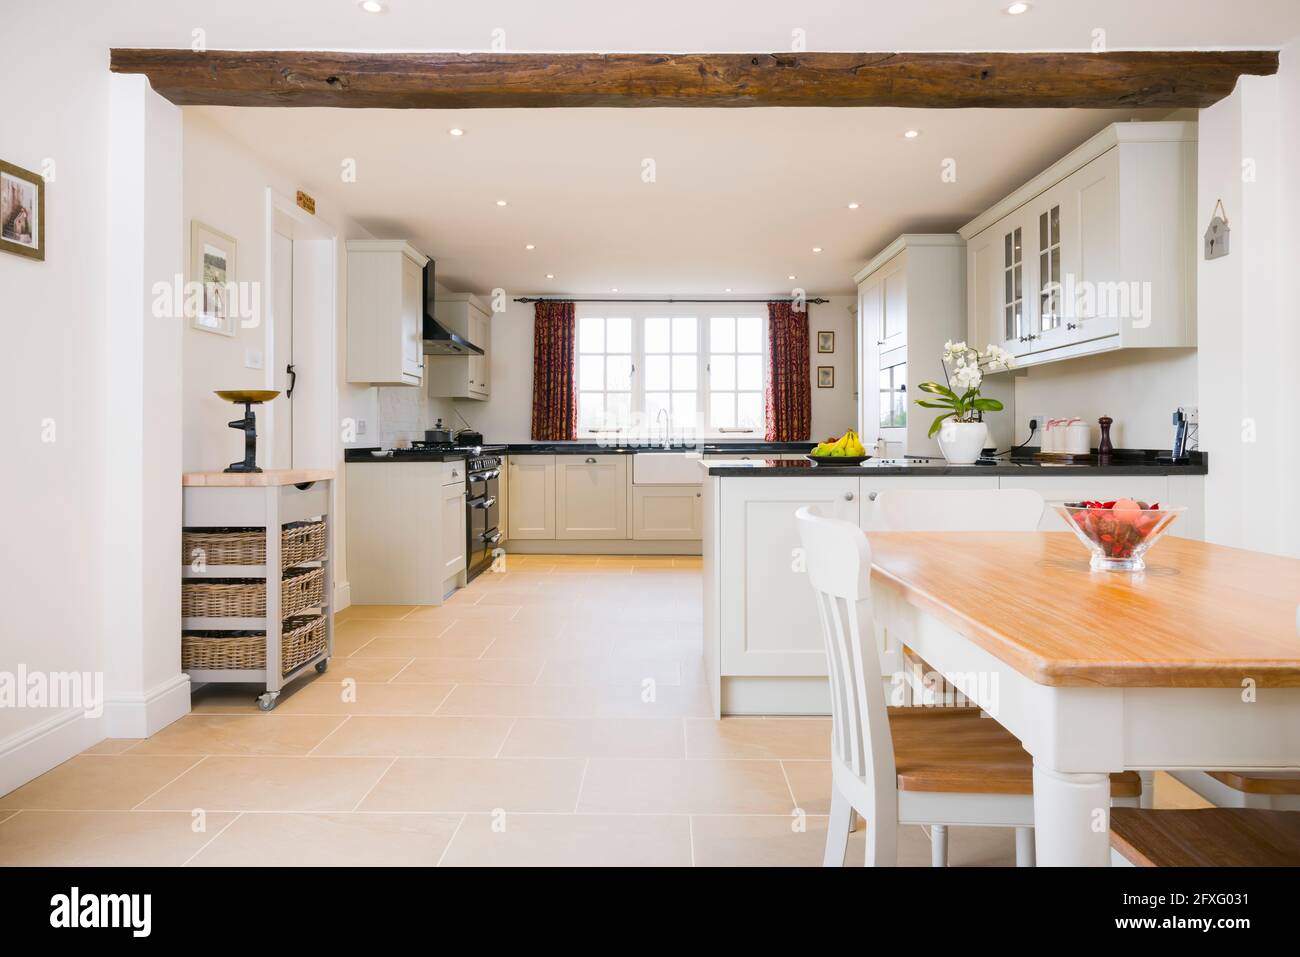 Cucina casale a pianta aperta, con moderne cucine modulari in legno dipinto, interni dal design inglese Foto Stock